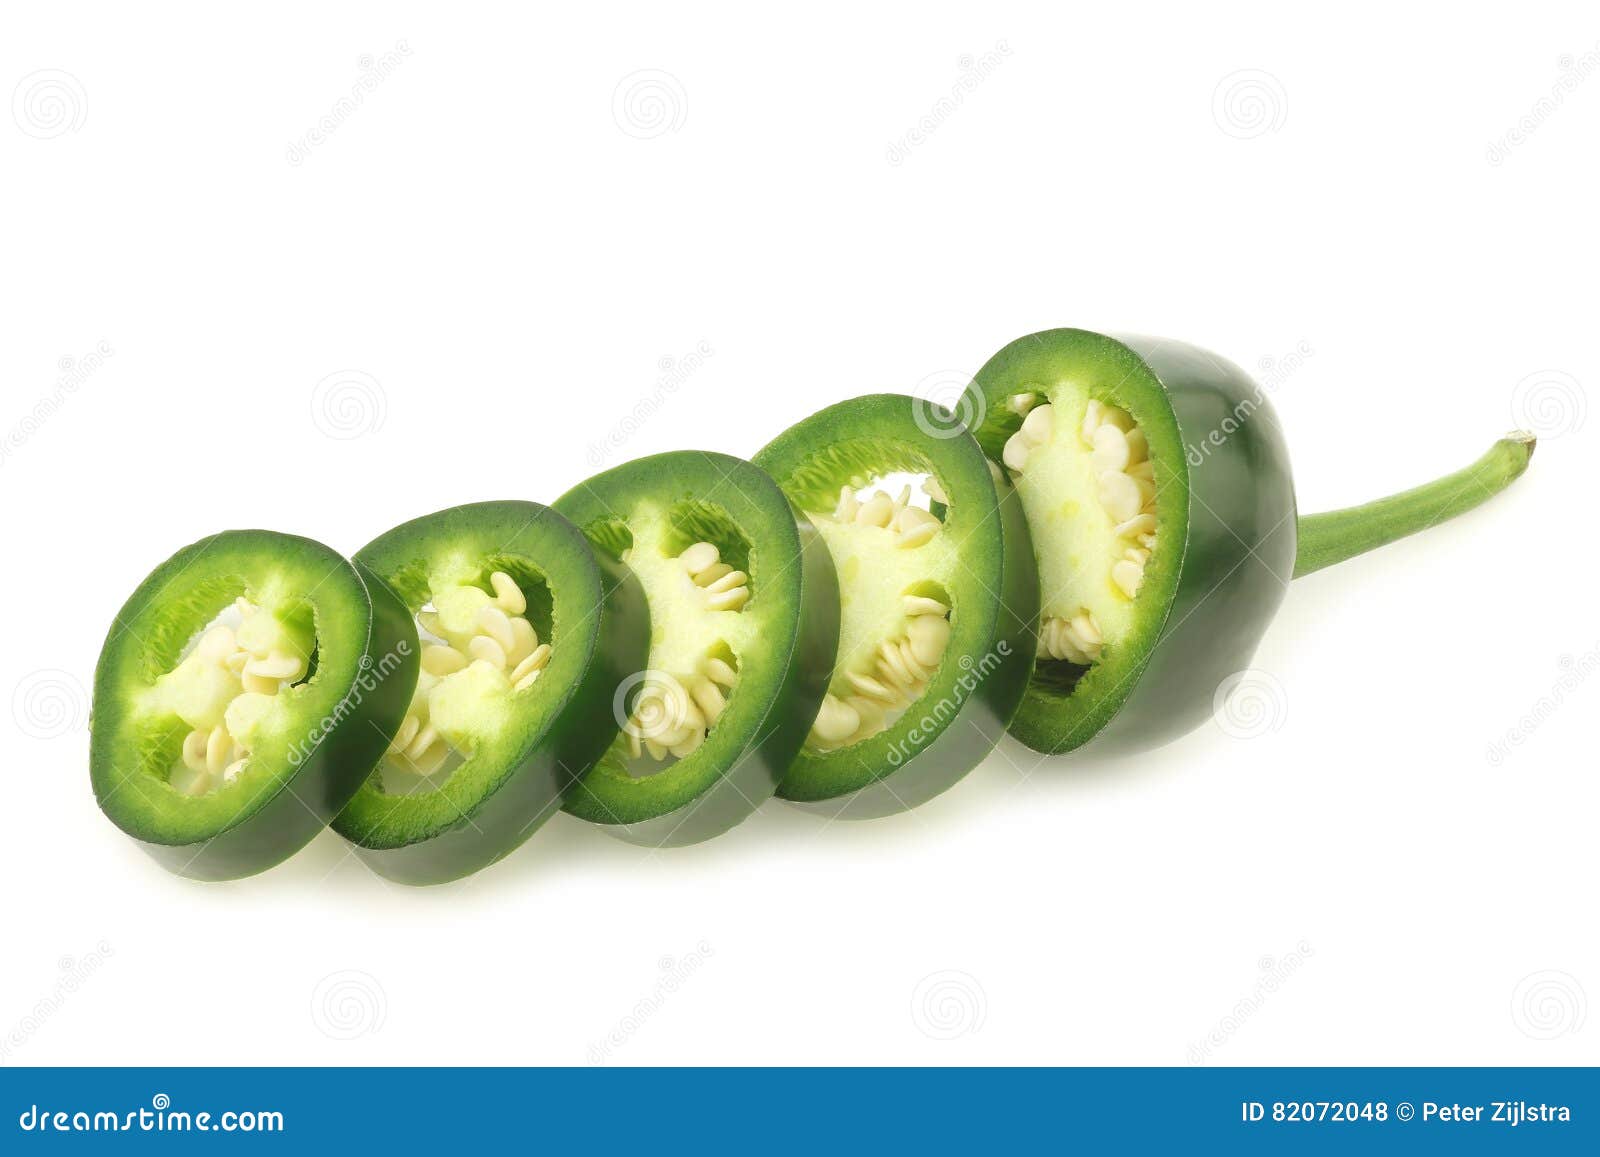 cut green pepper jalapeno